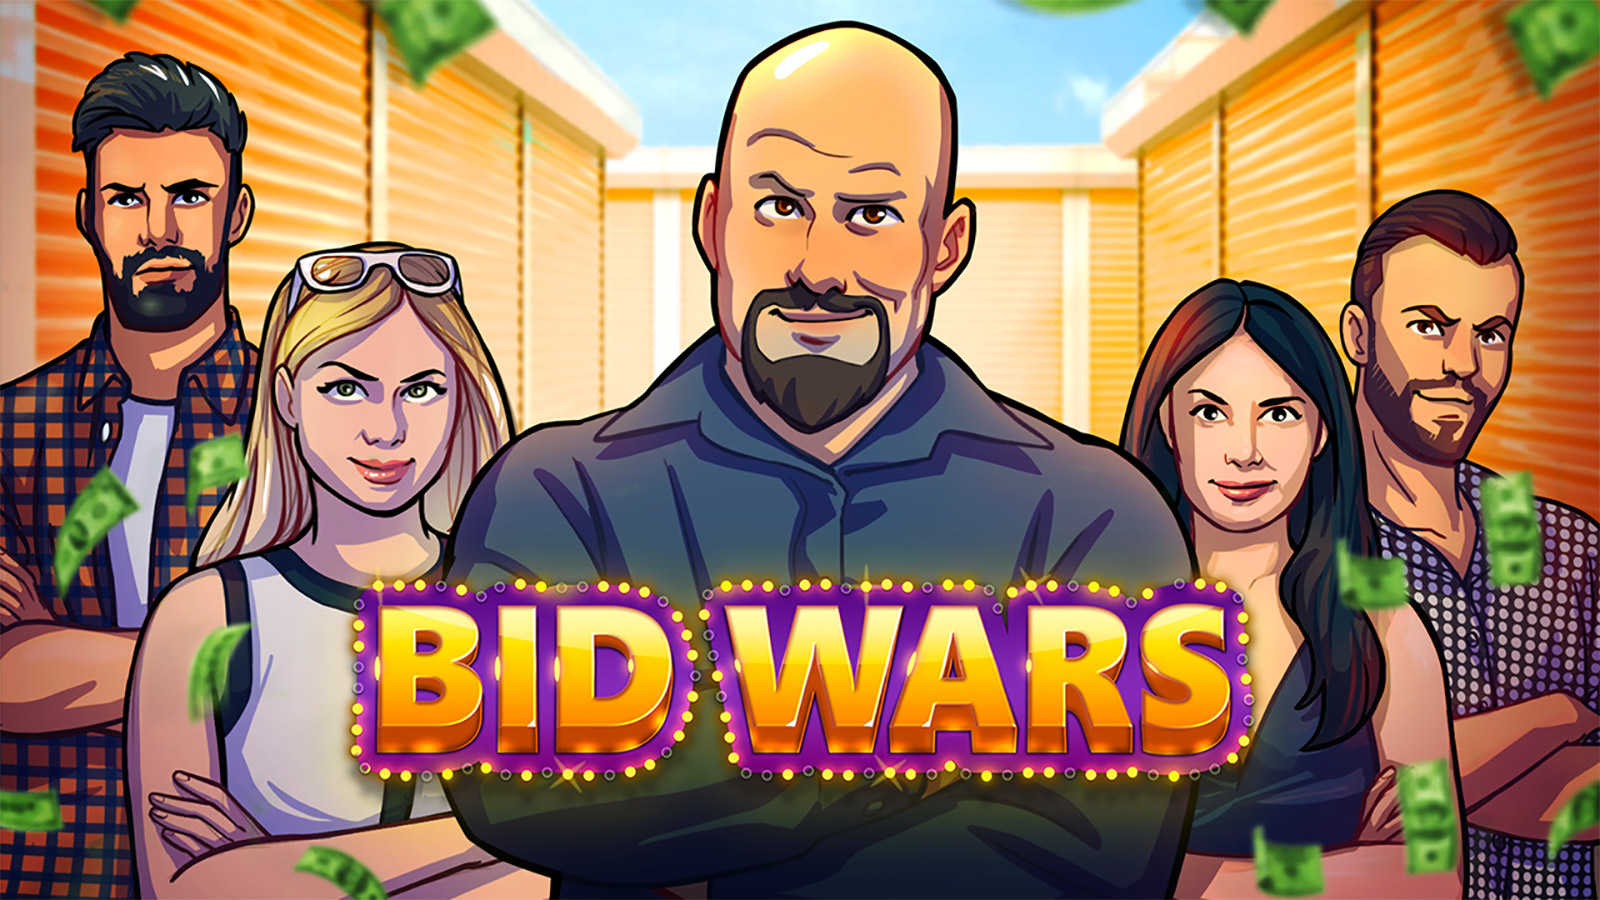 Bid Wars 2 Mod Apk 1.44.4 (Unlimited Money)